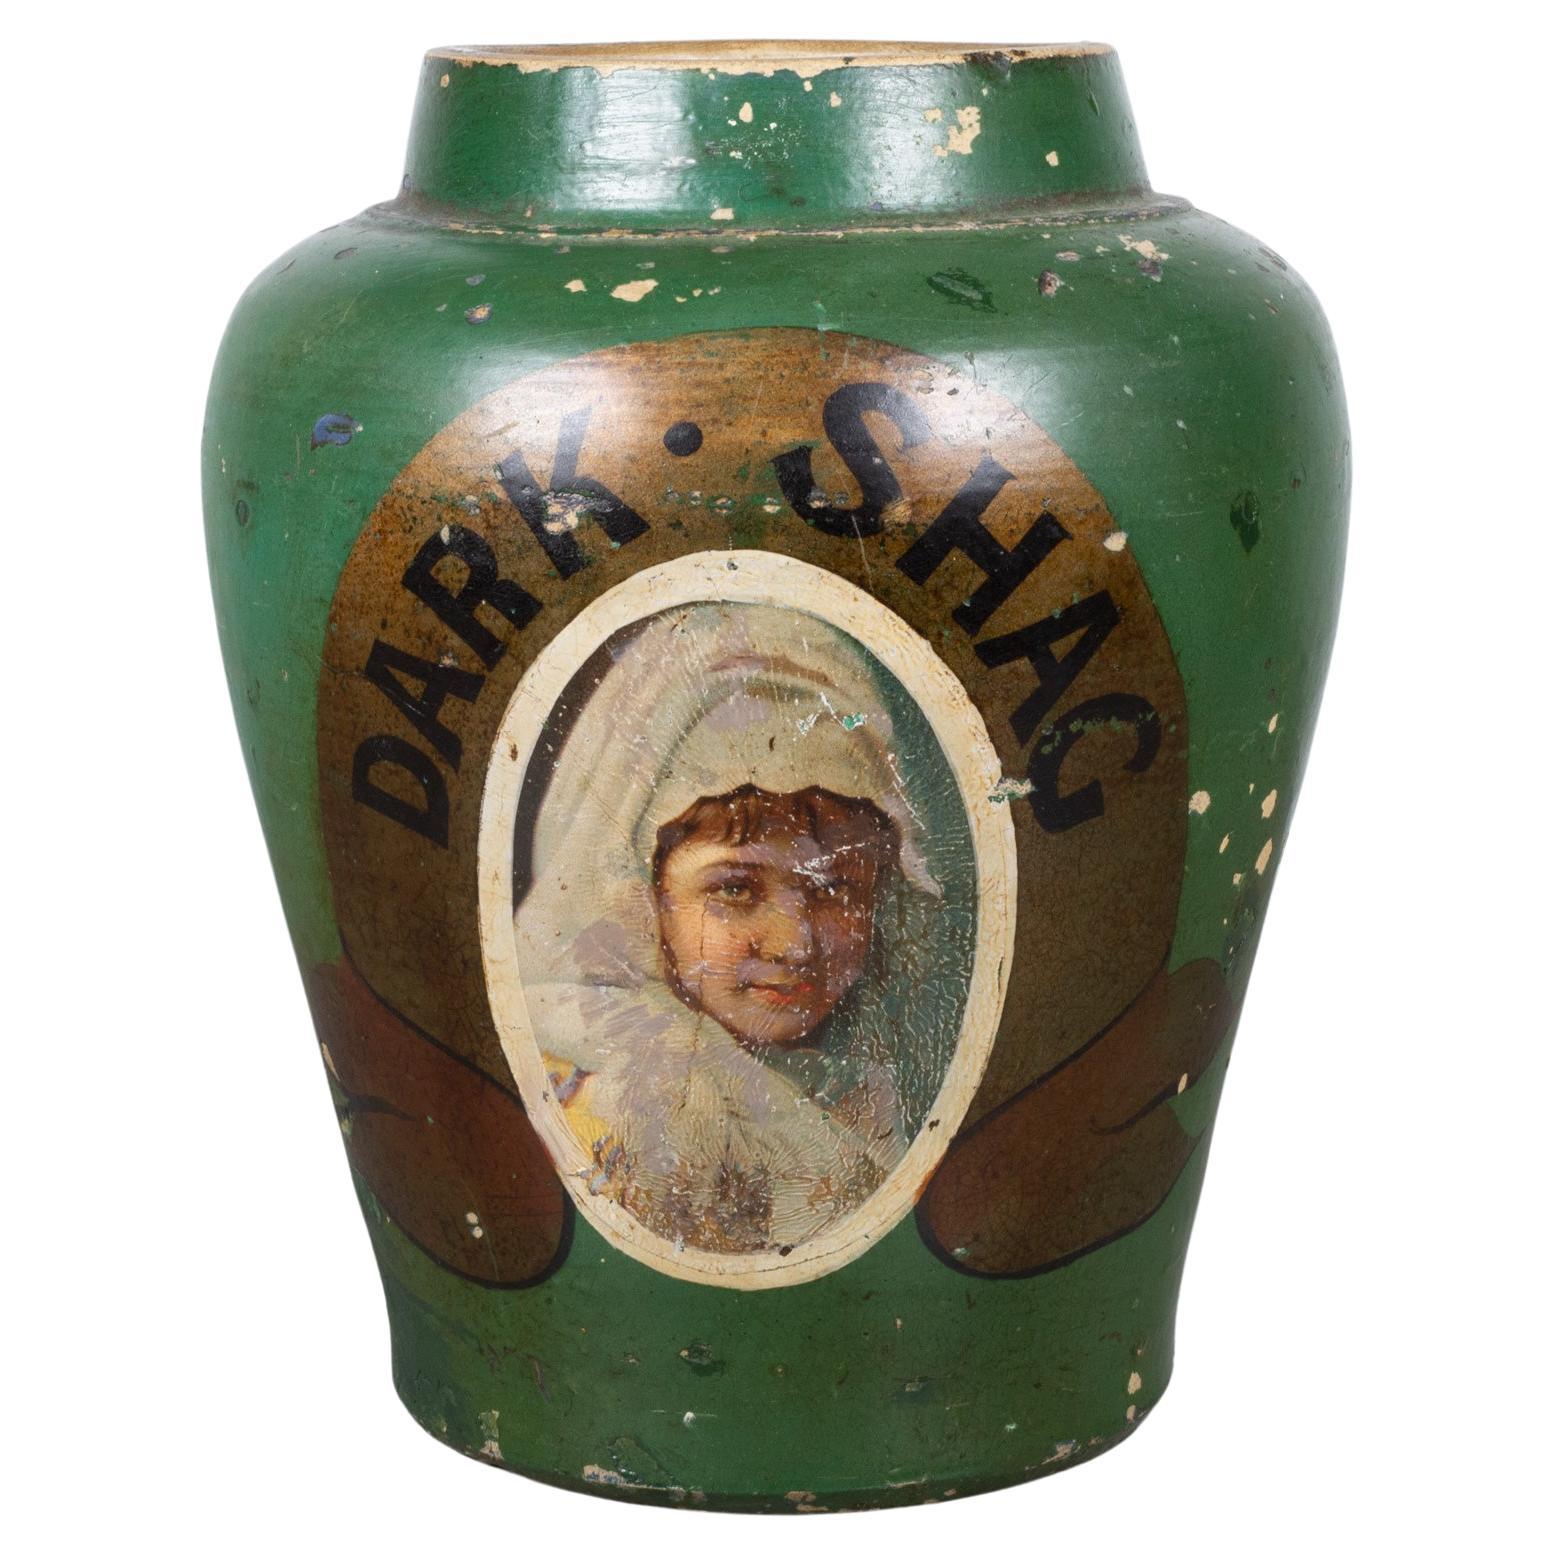 Antique Tobacconist Display Jar "Dark Shag" circa 1920  (FREE SHIPPING)